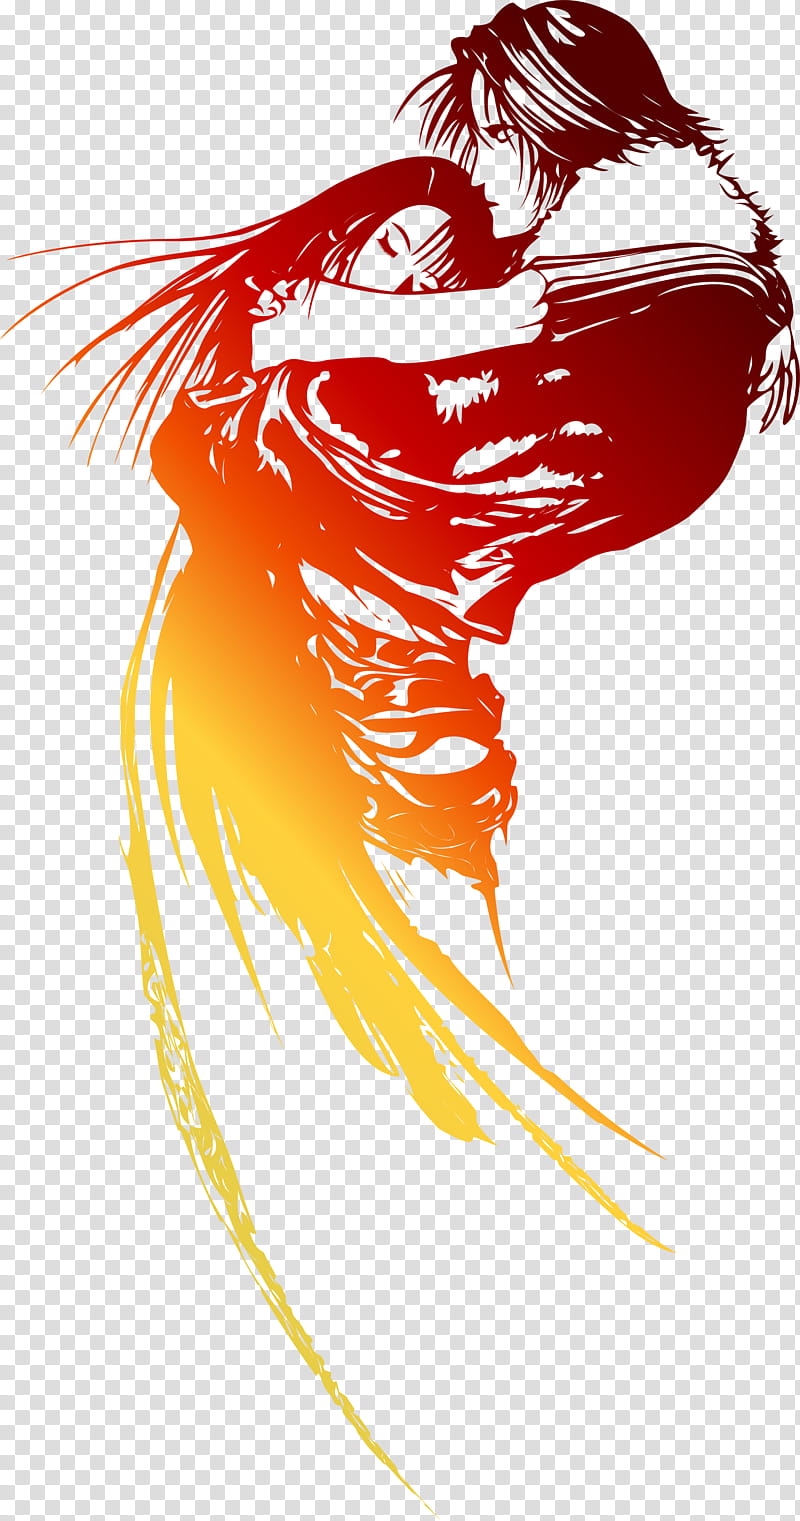 Final Fantasy VIII logo transparent background PNG clipart